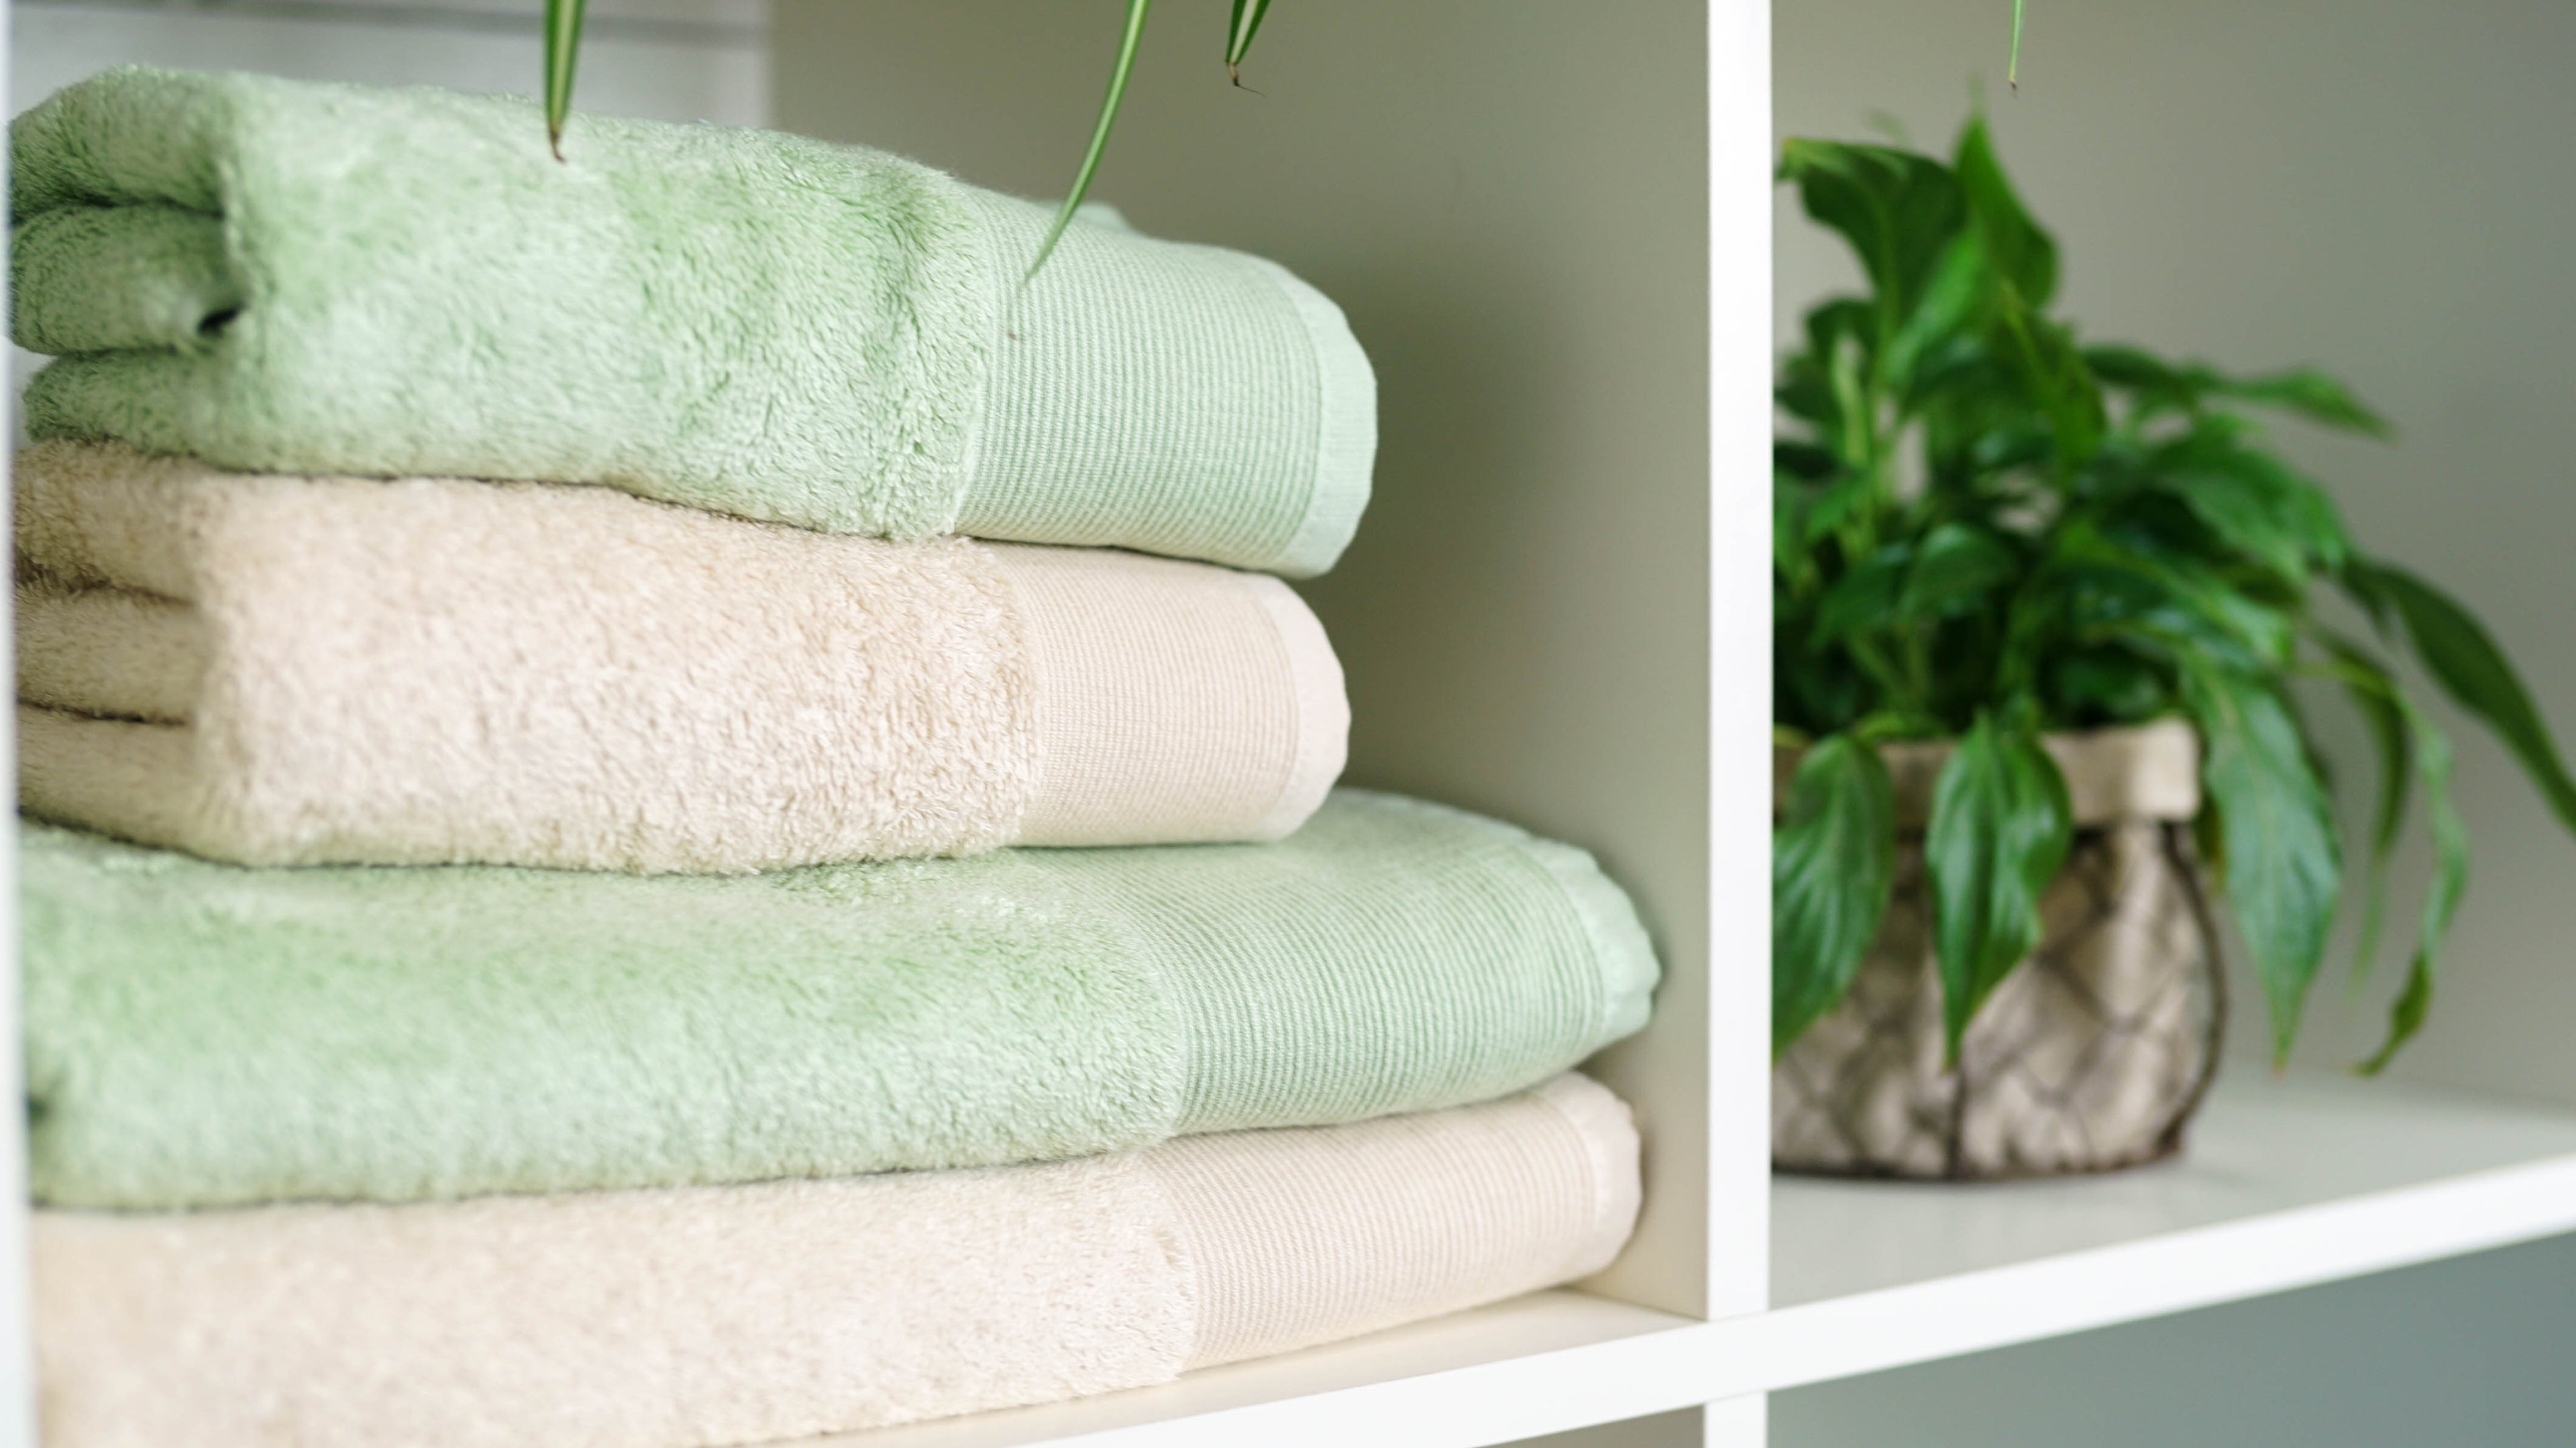 Green Bathroom Towels - Luxury Cotton Towels - Plain & Patterned